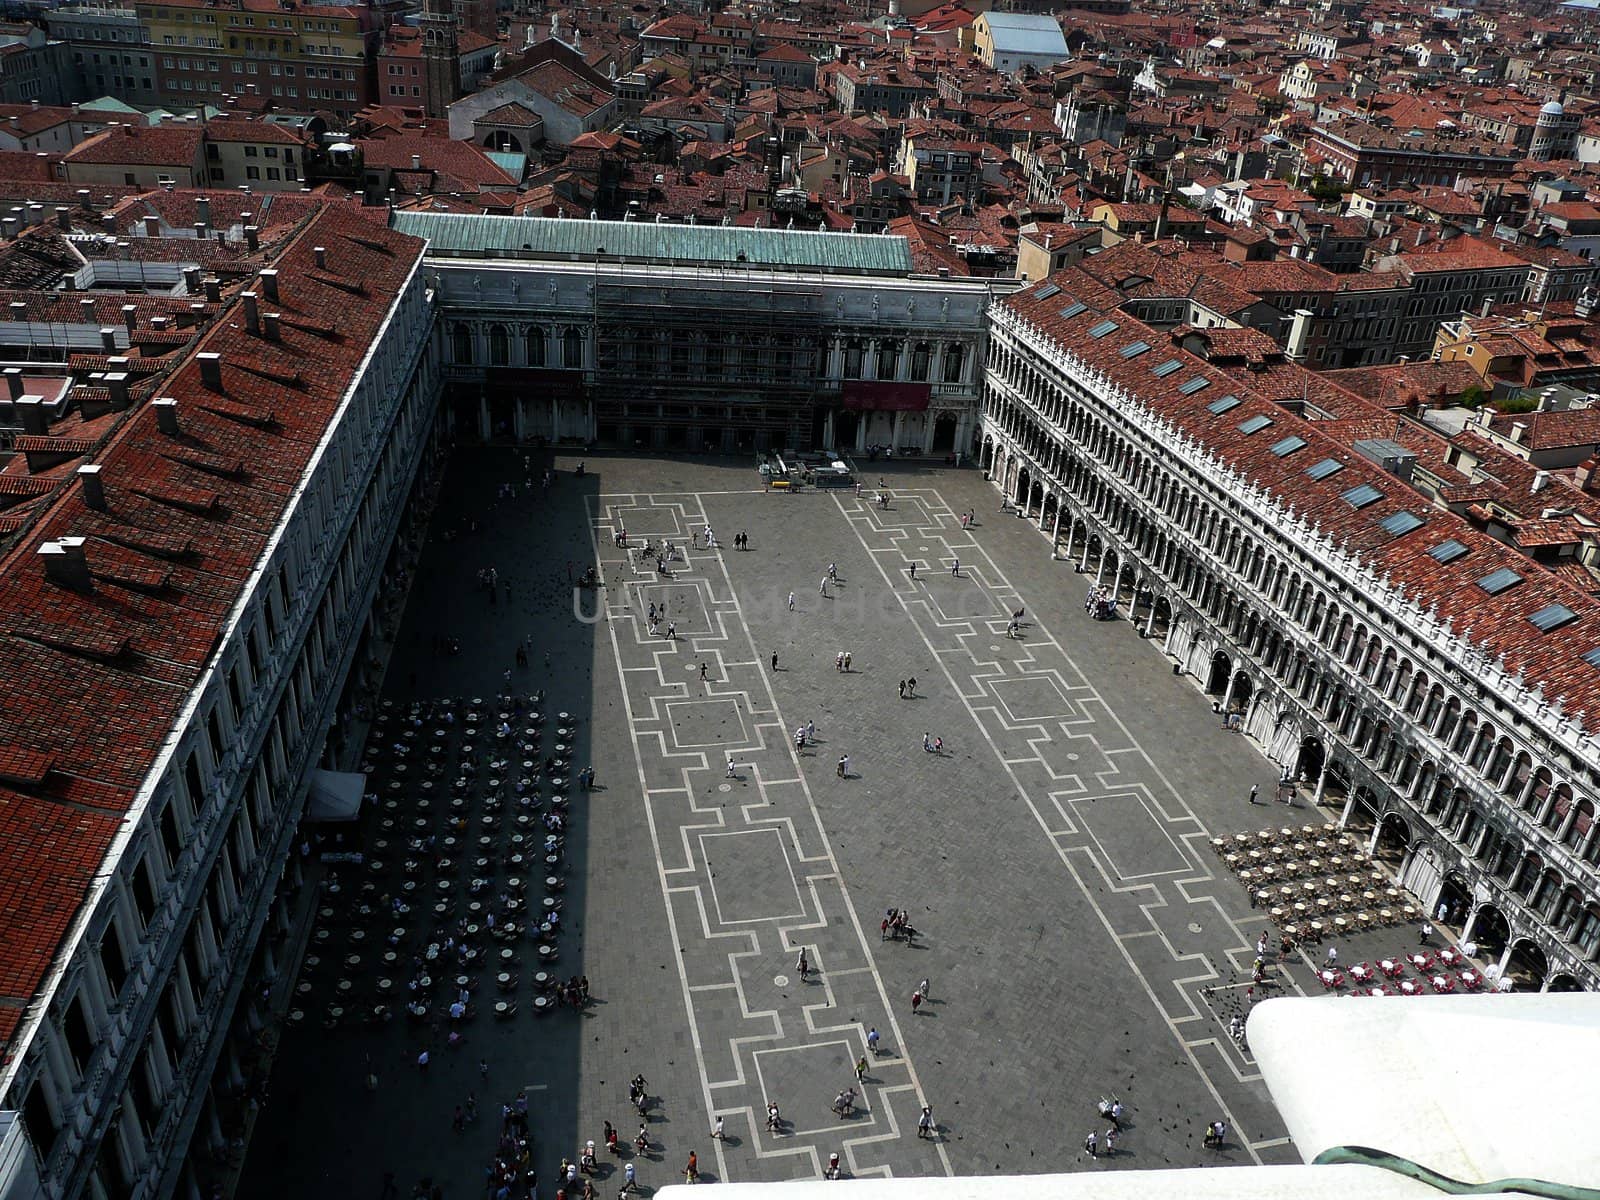 View over St Mark's Square, Venice, Italy by marcorubino